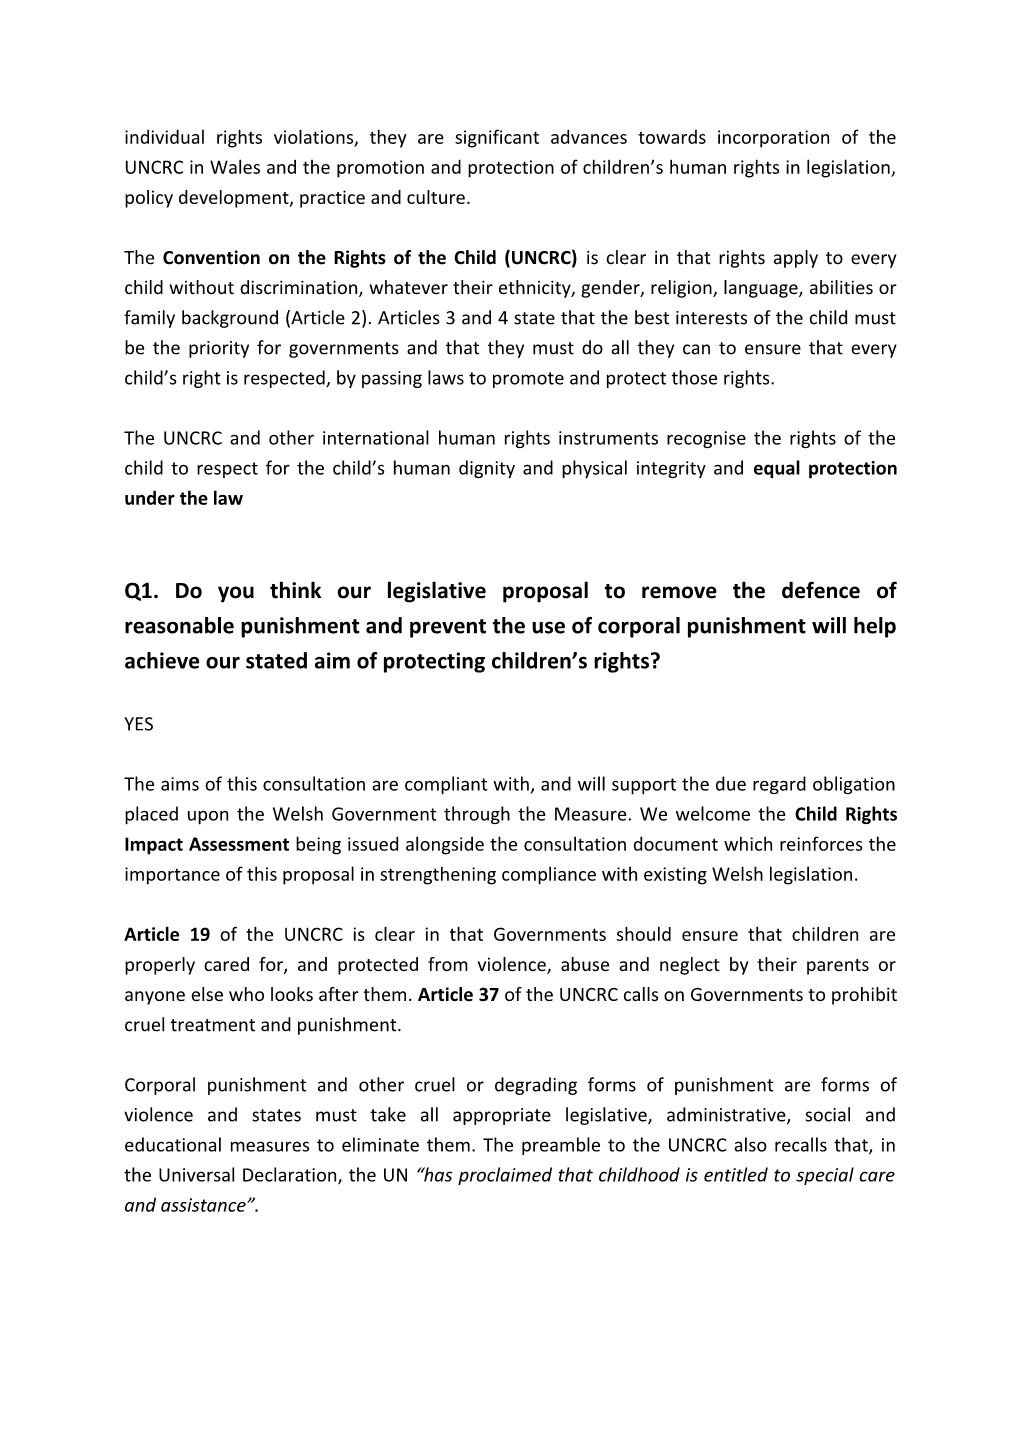 Consultation Response: Legislative Proposal to Remove the Defence of Reasonable Punishment